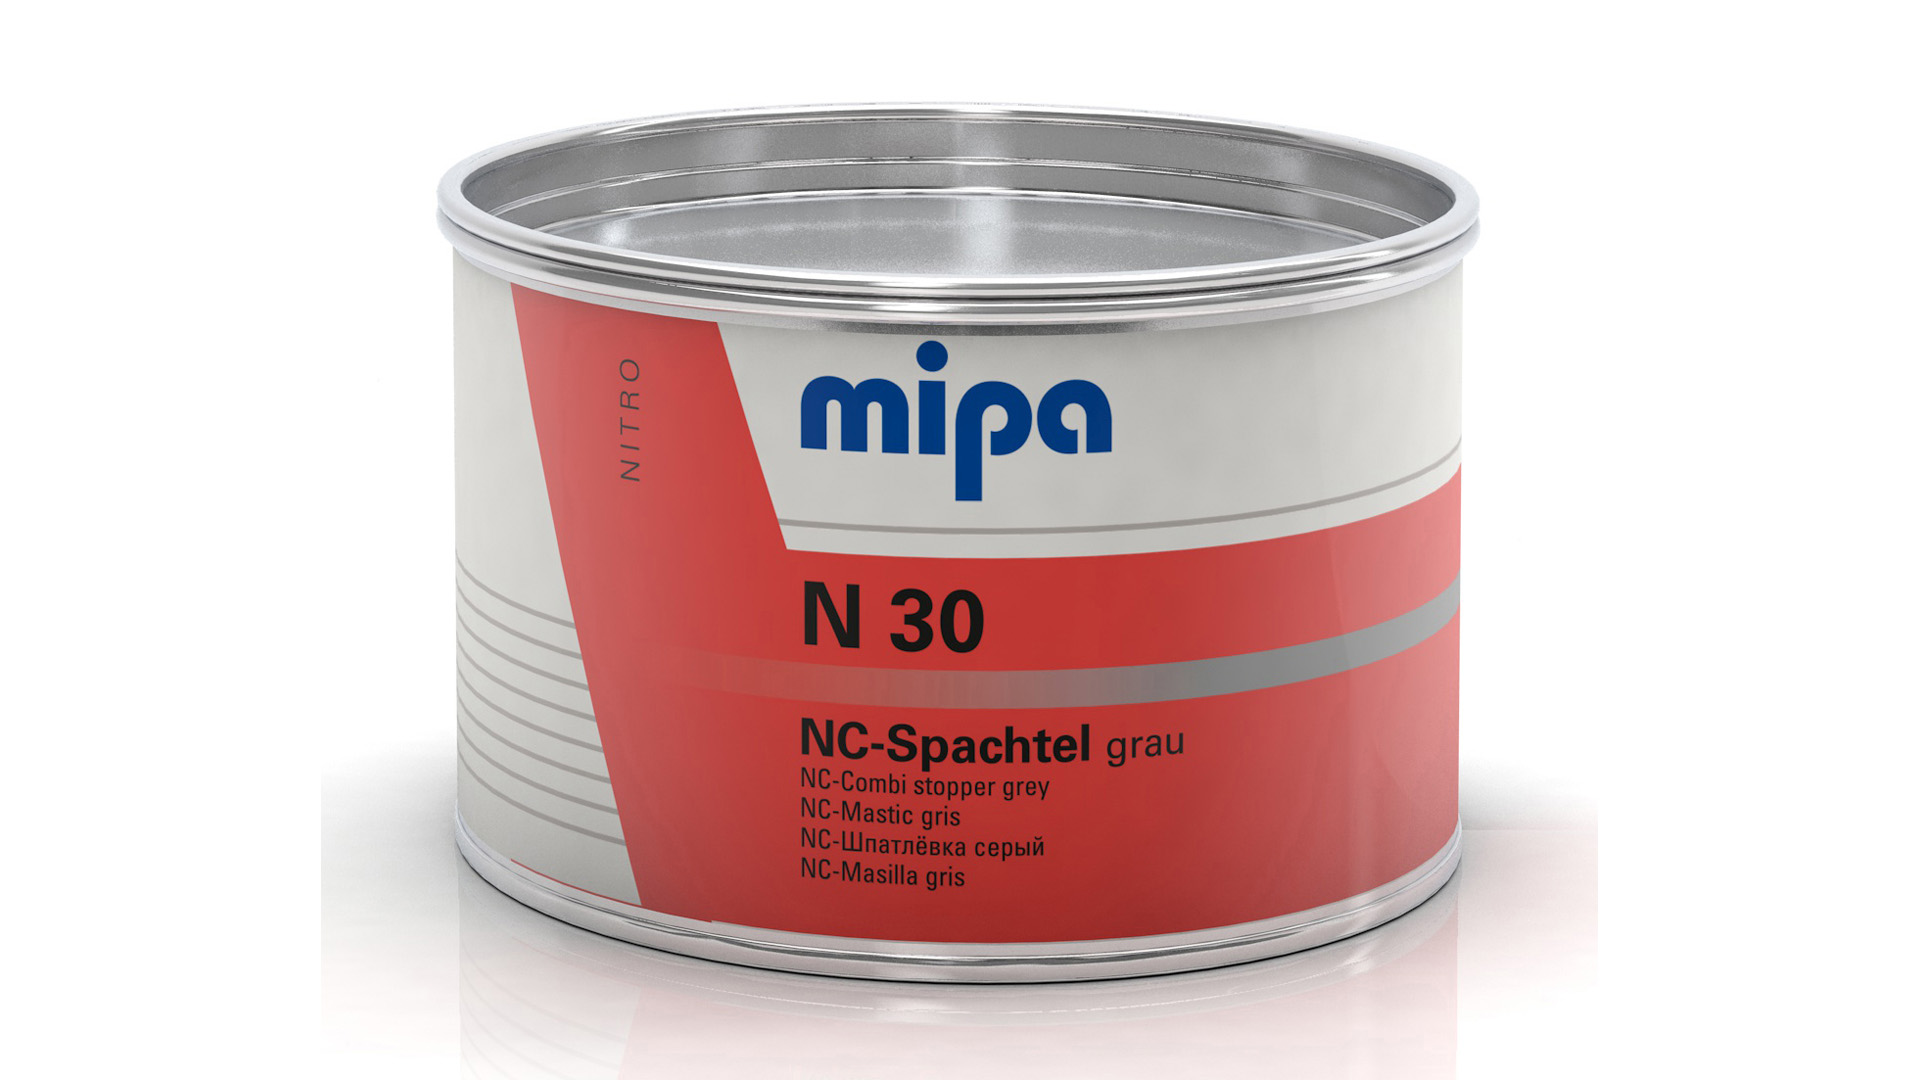 Mipa N 30 NC-Auto-Spachtel grau (900g)